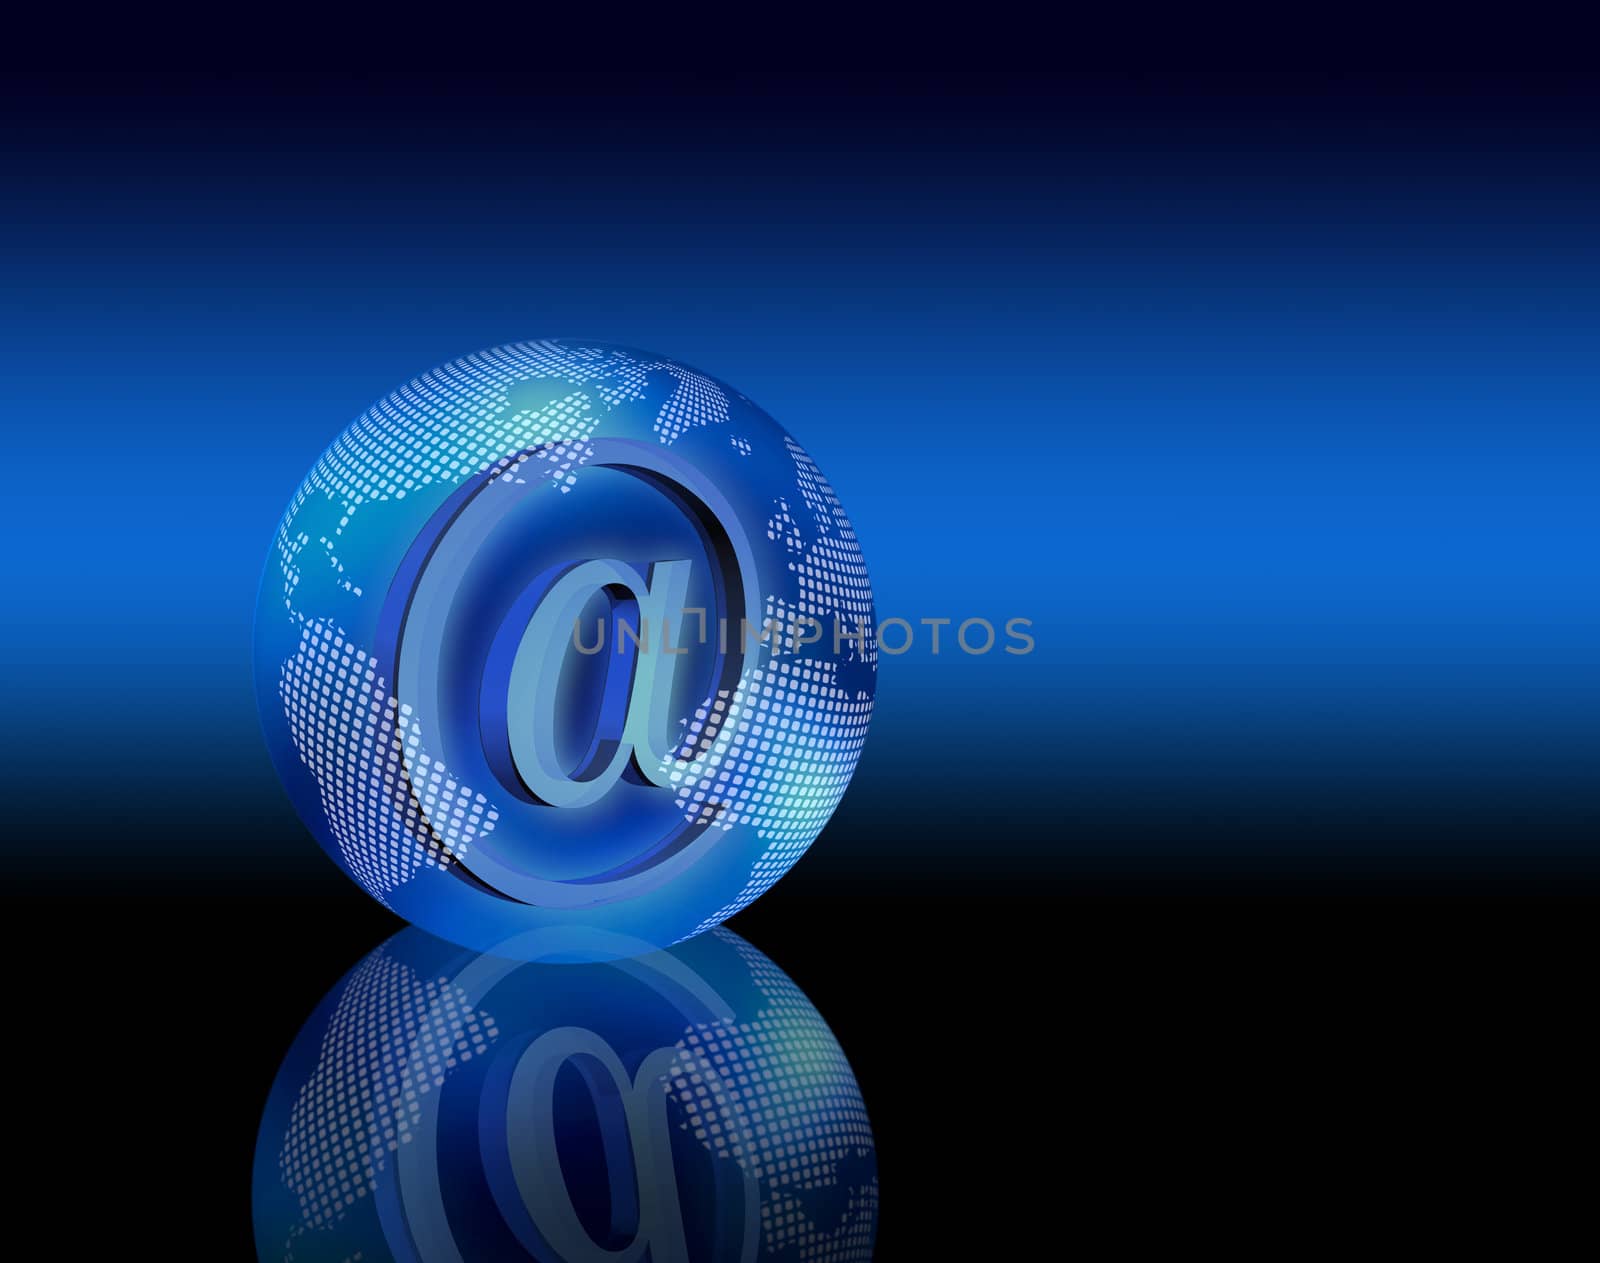 Digital e-mail planet by anterovium